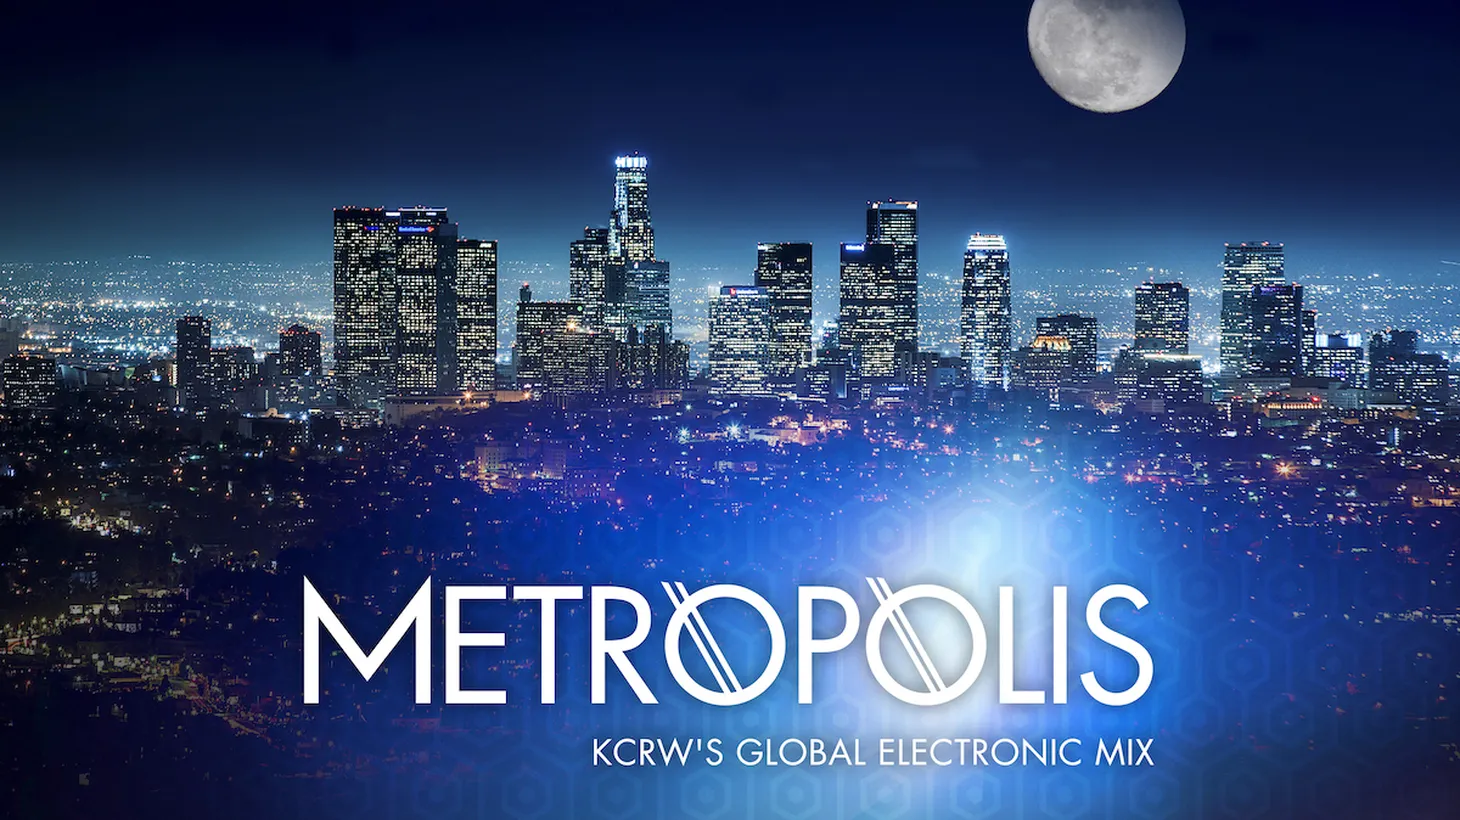 Metropolis playlist, August 21, 2021.